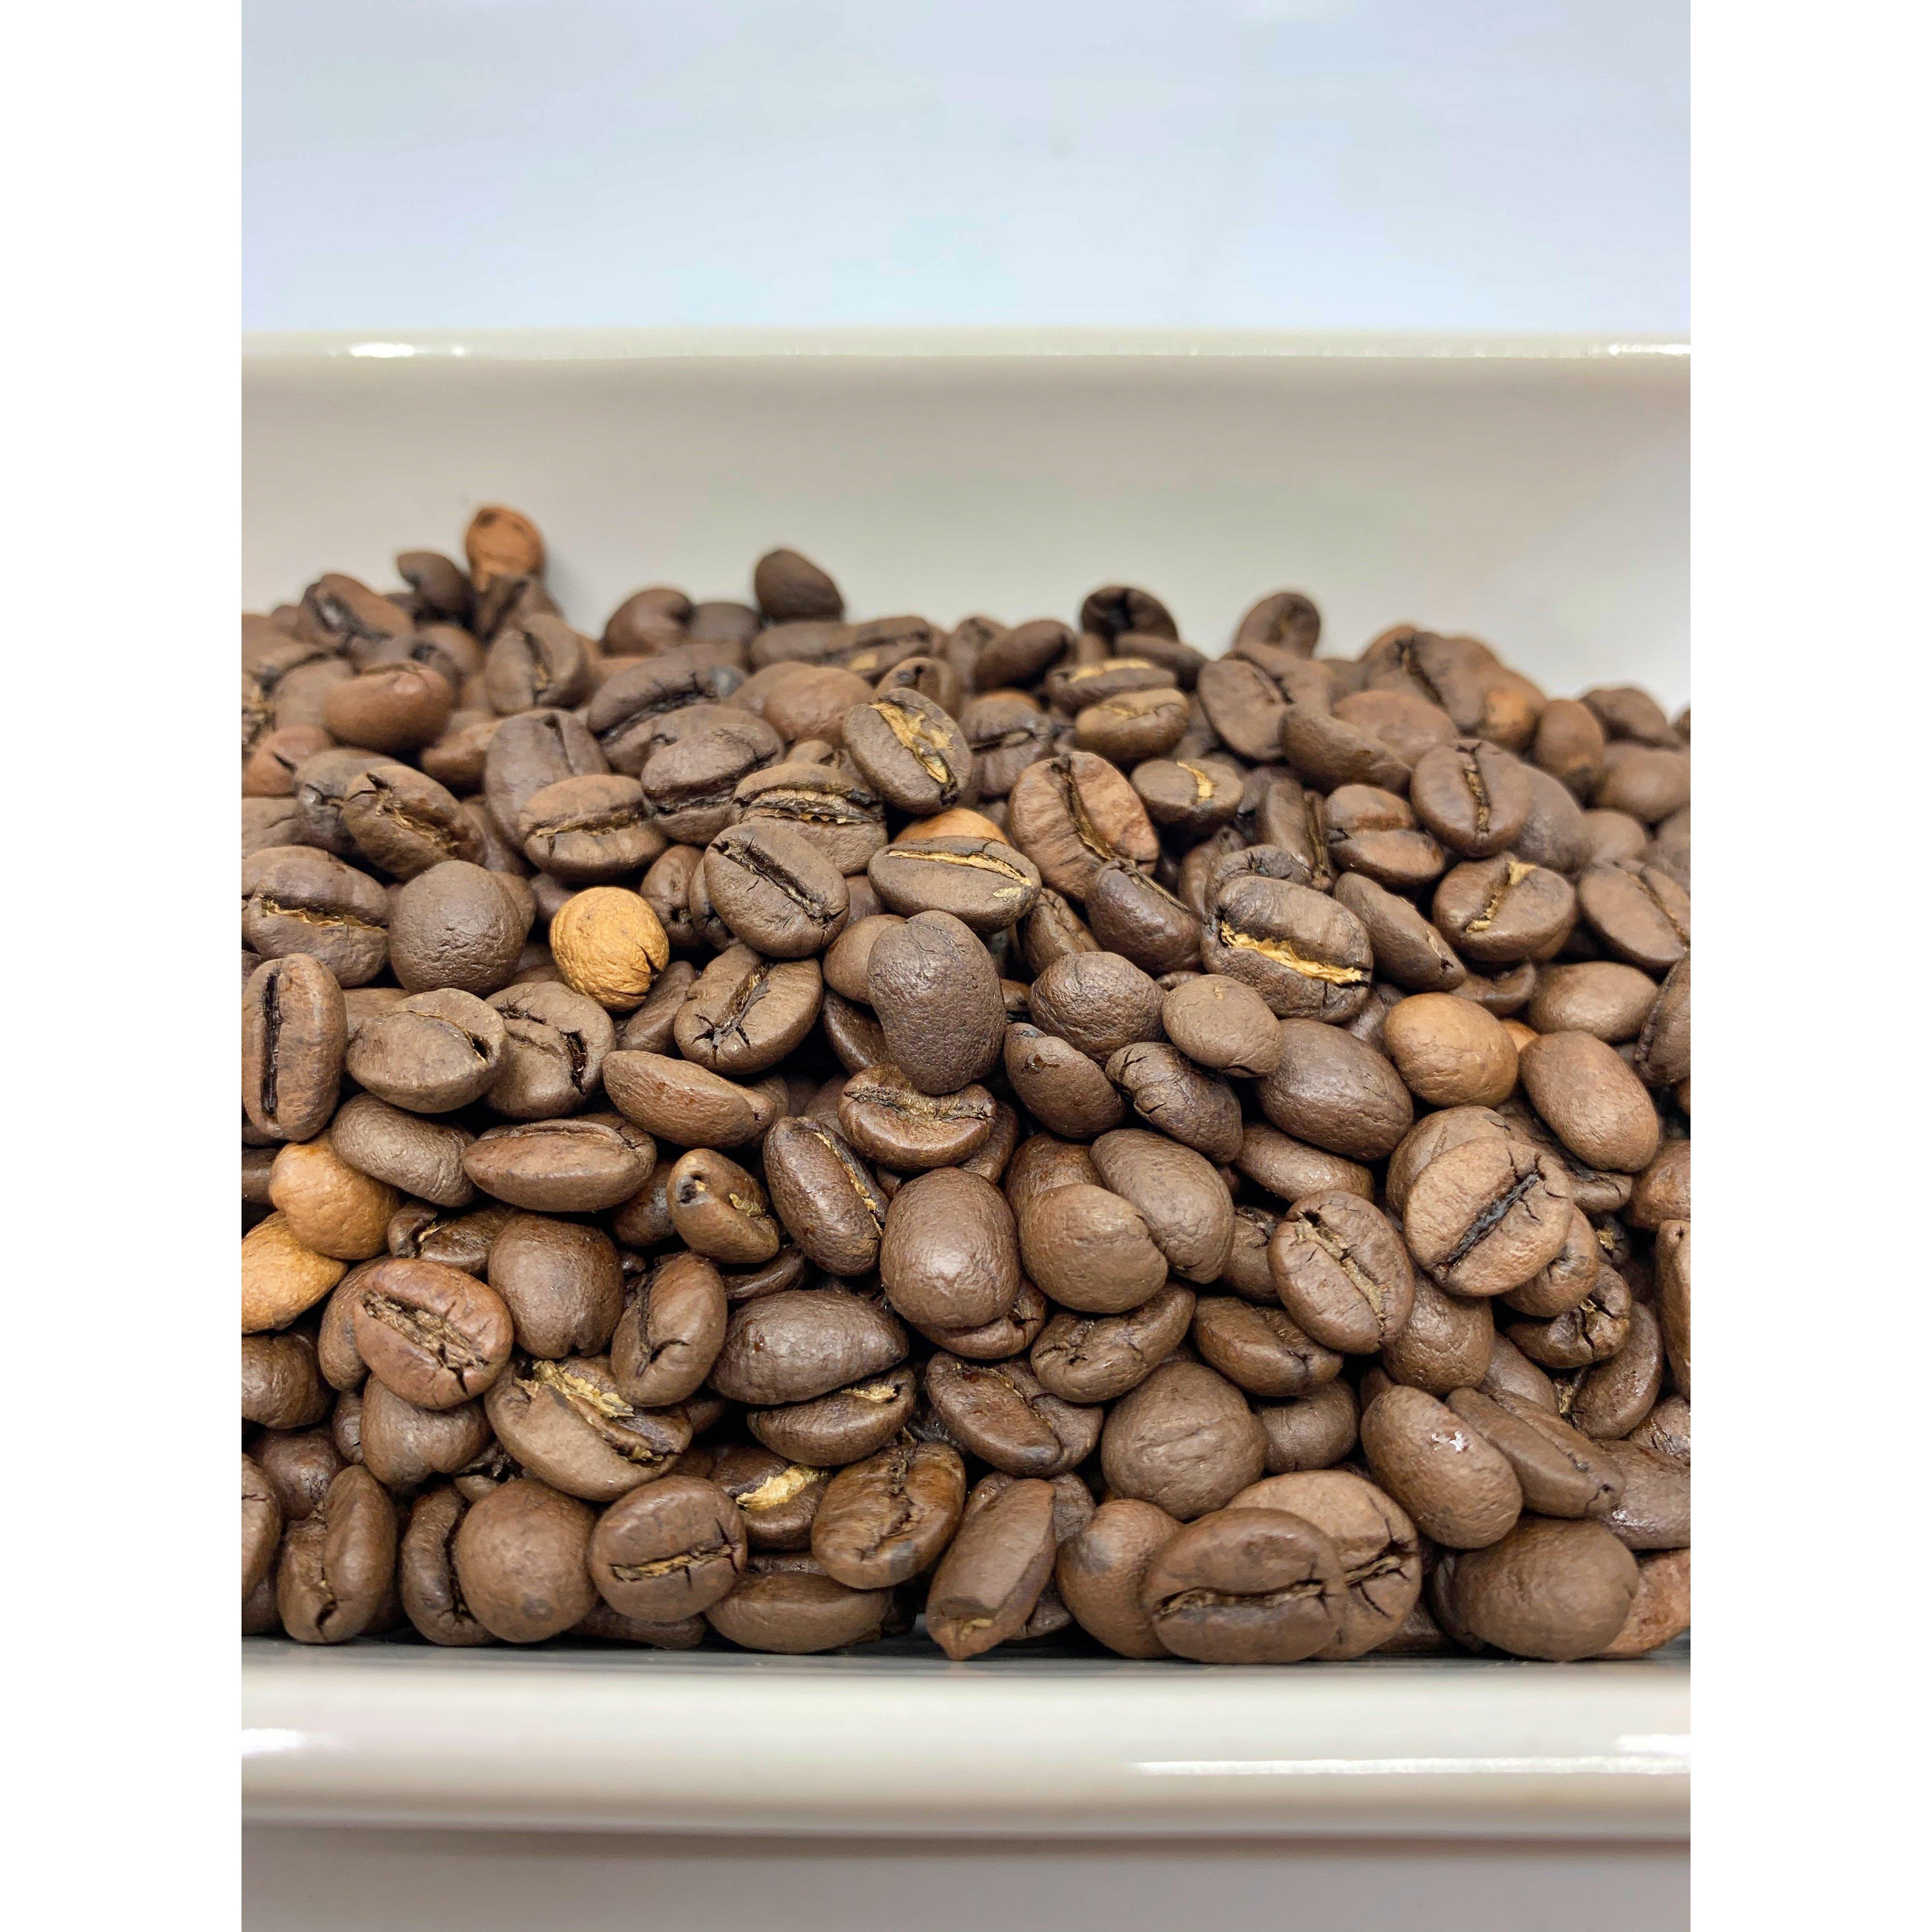 Super Crema - Coffee Beans